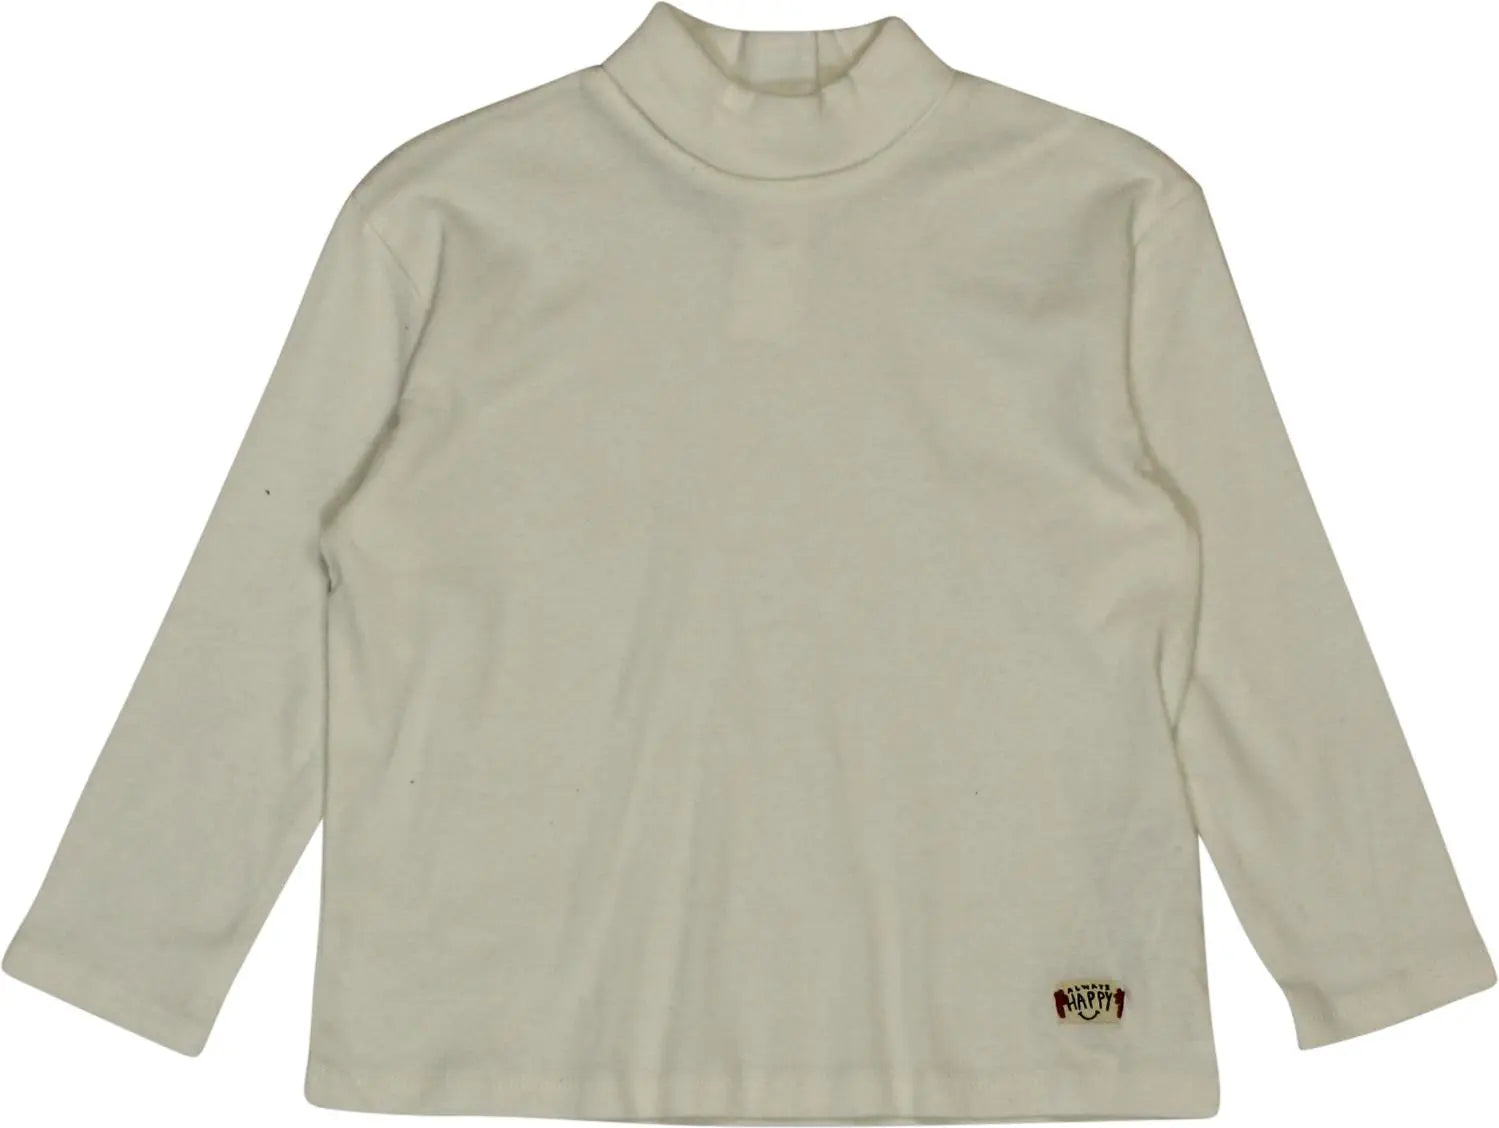 Zara - Long Sleeve Turtleneck Shirt- ThriftTale.com - Vintage and second handclothing